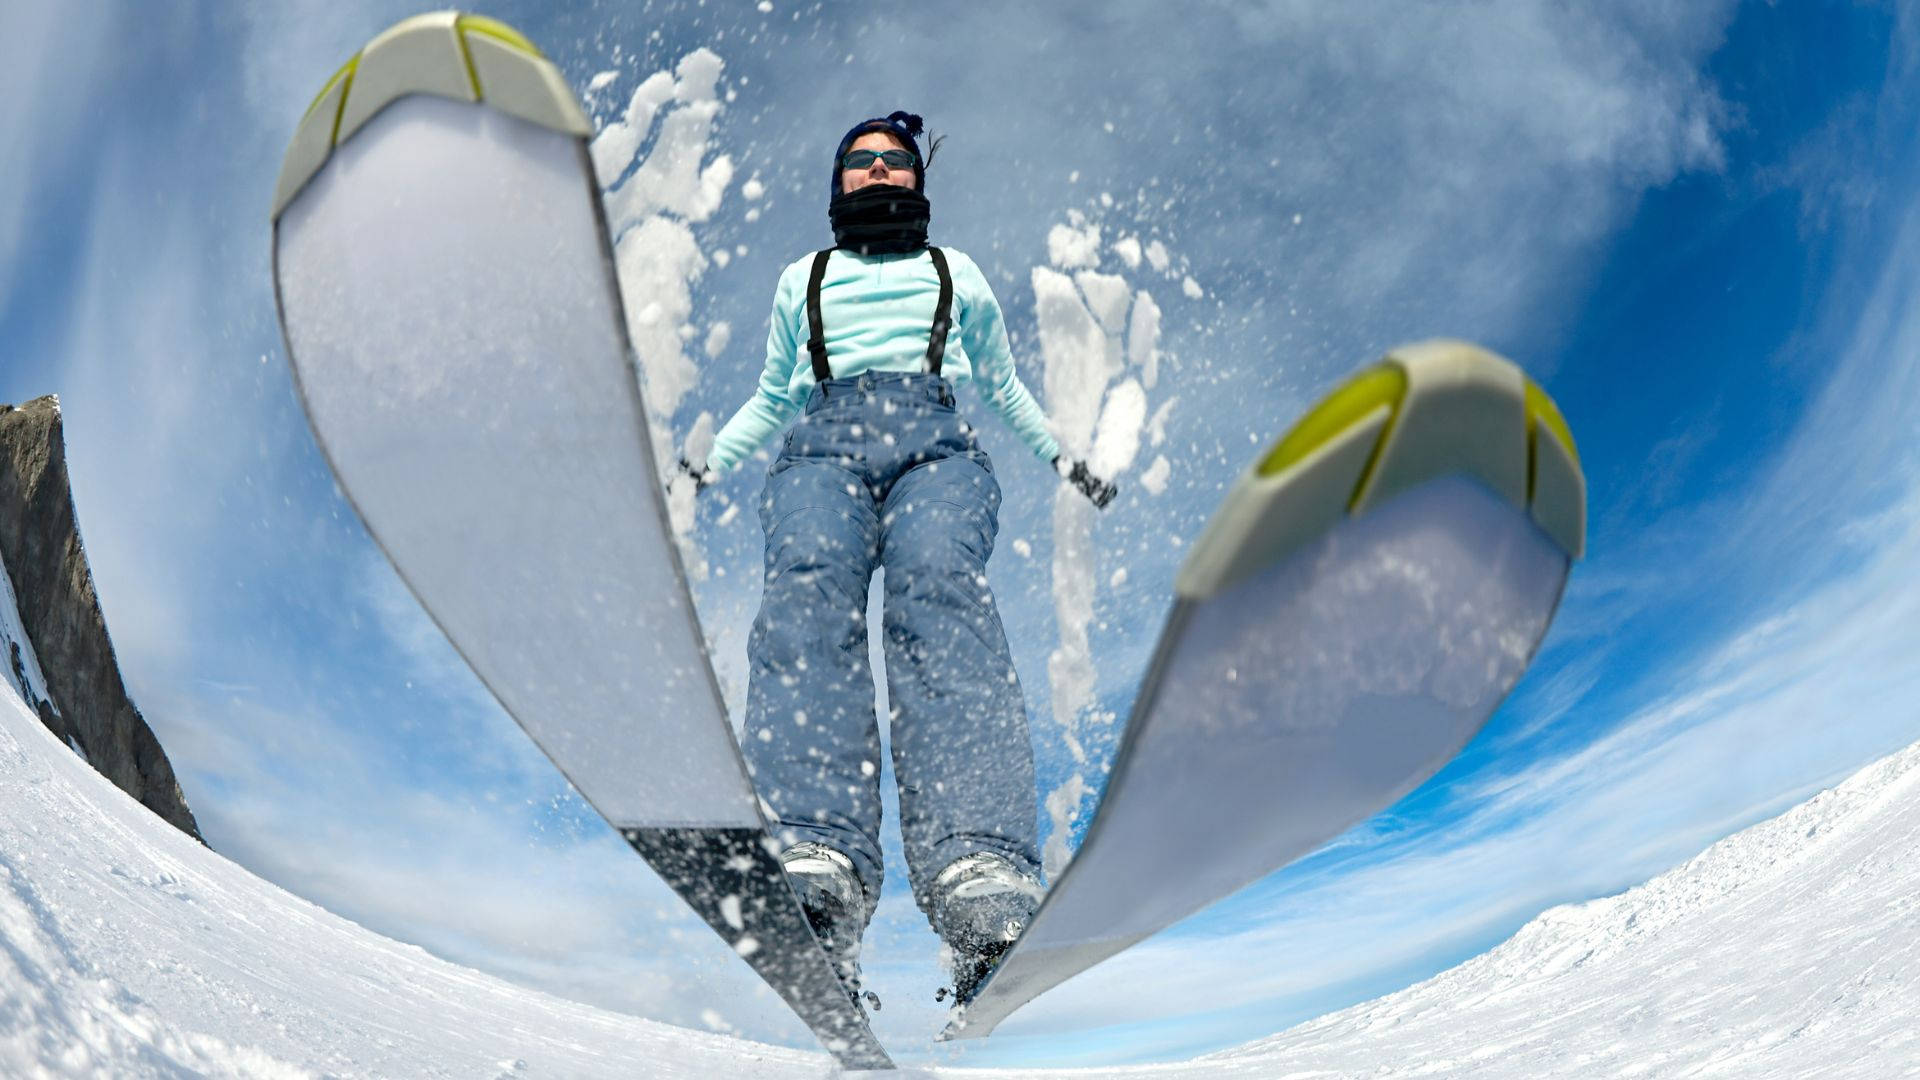 Ski Jumping Bottom View Wallpaper